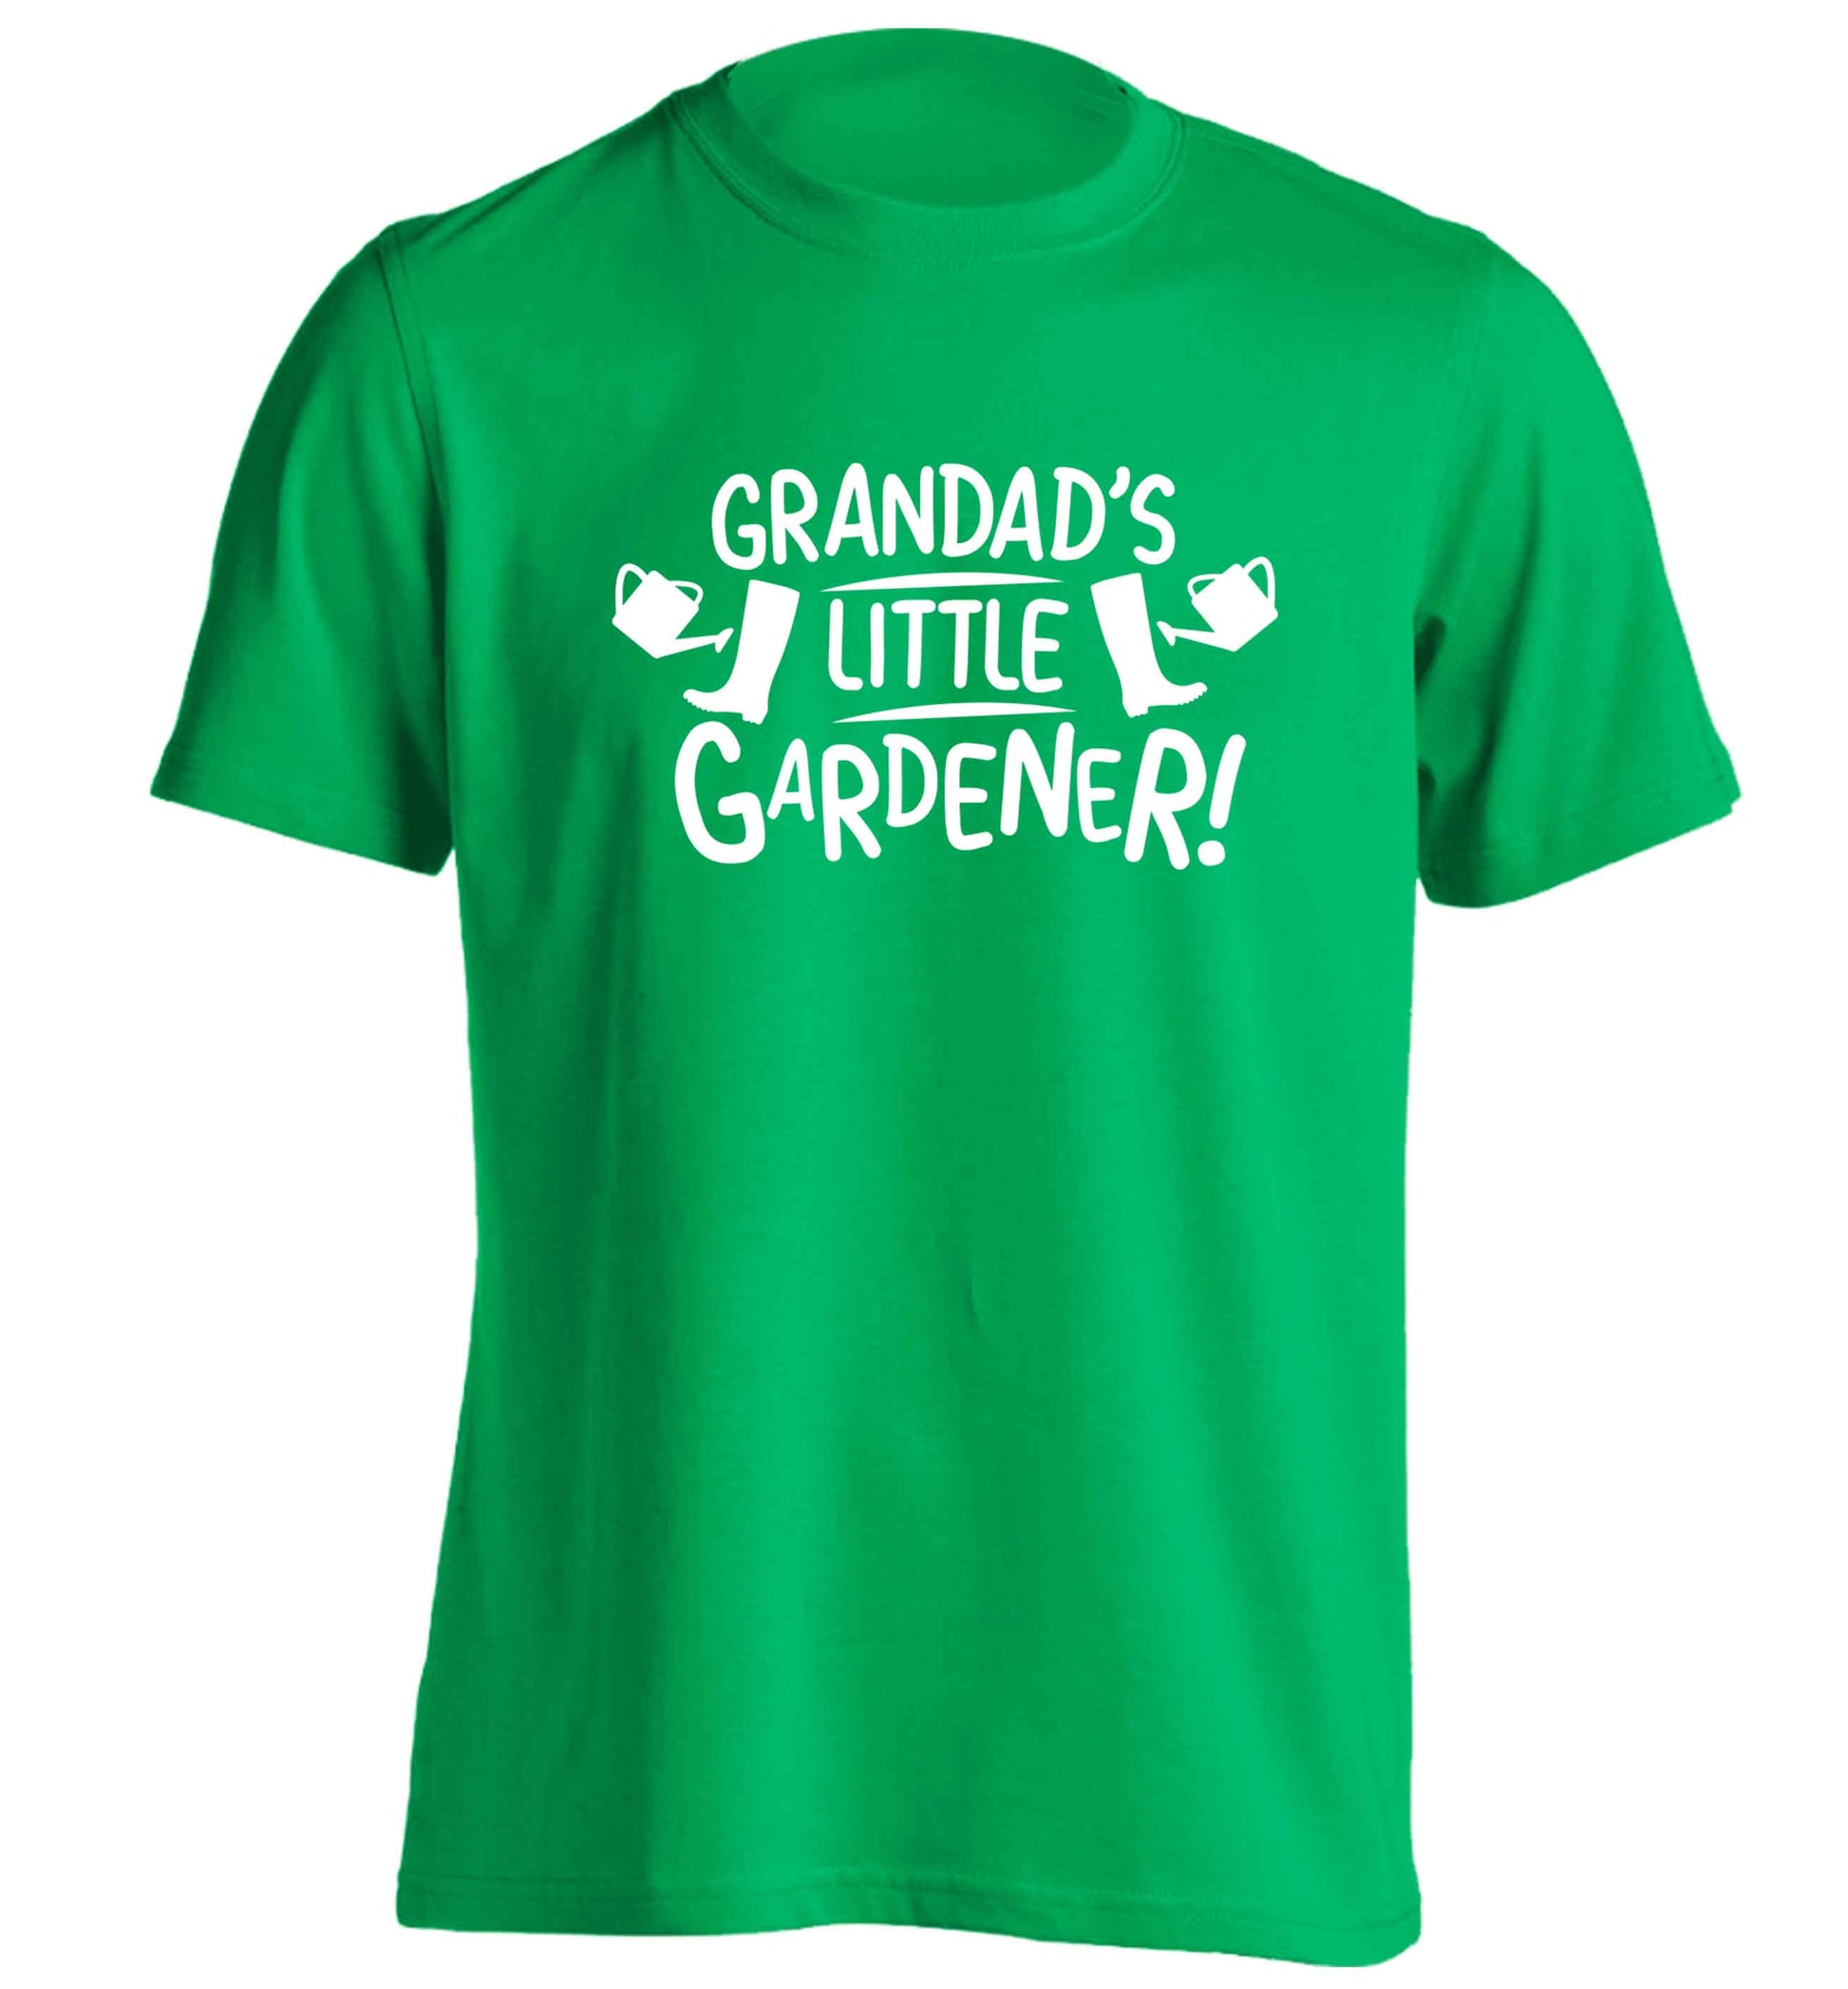 Grandad's little gardener adults unisex green Tshirt 2XL